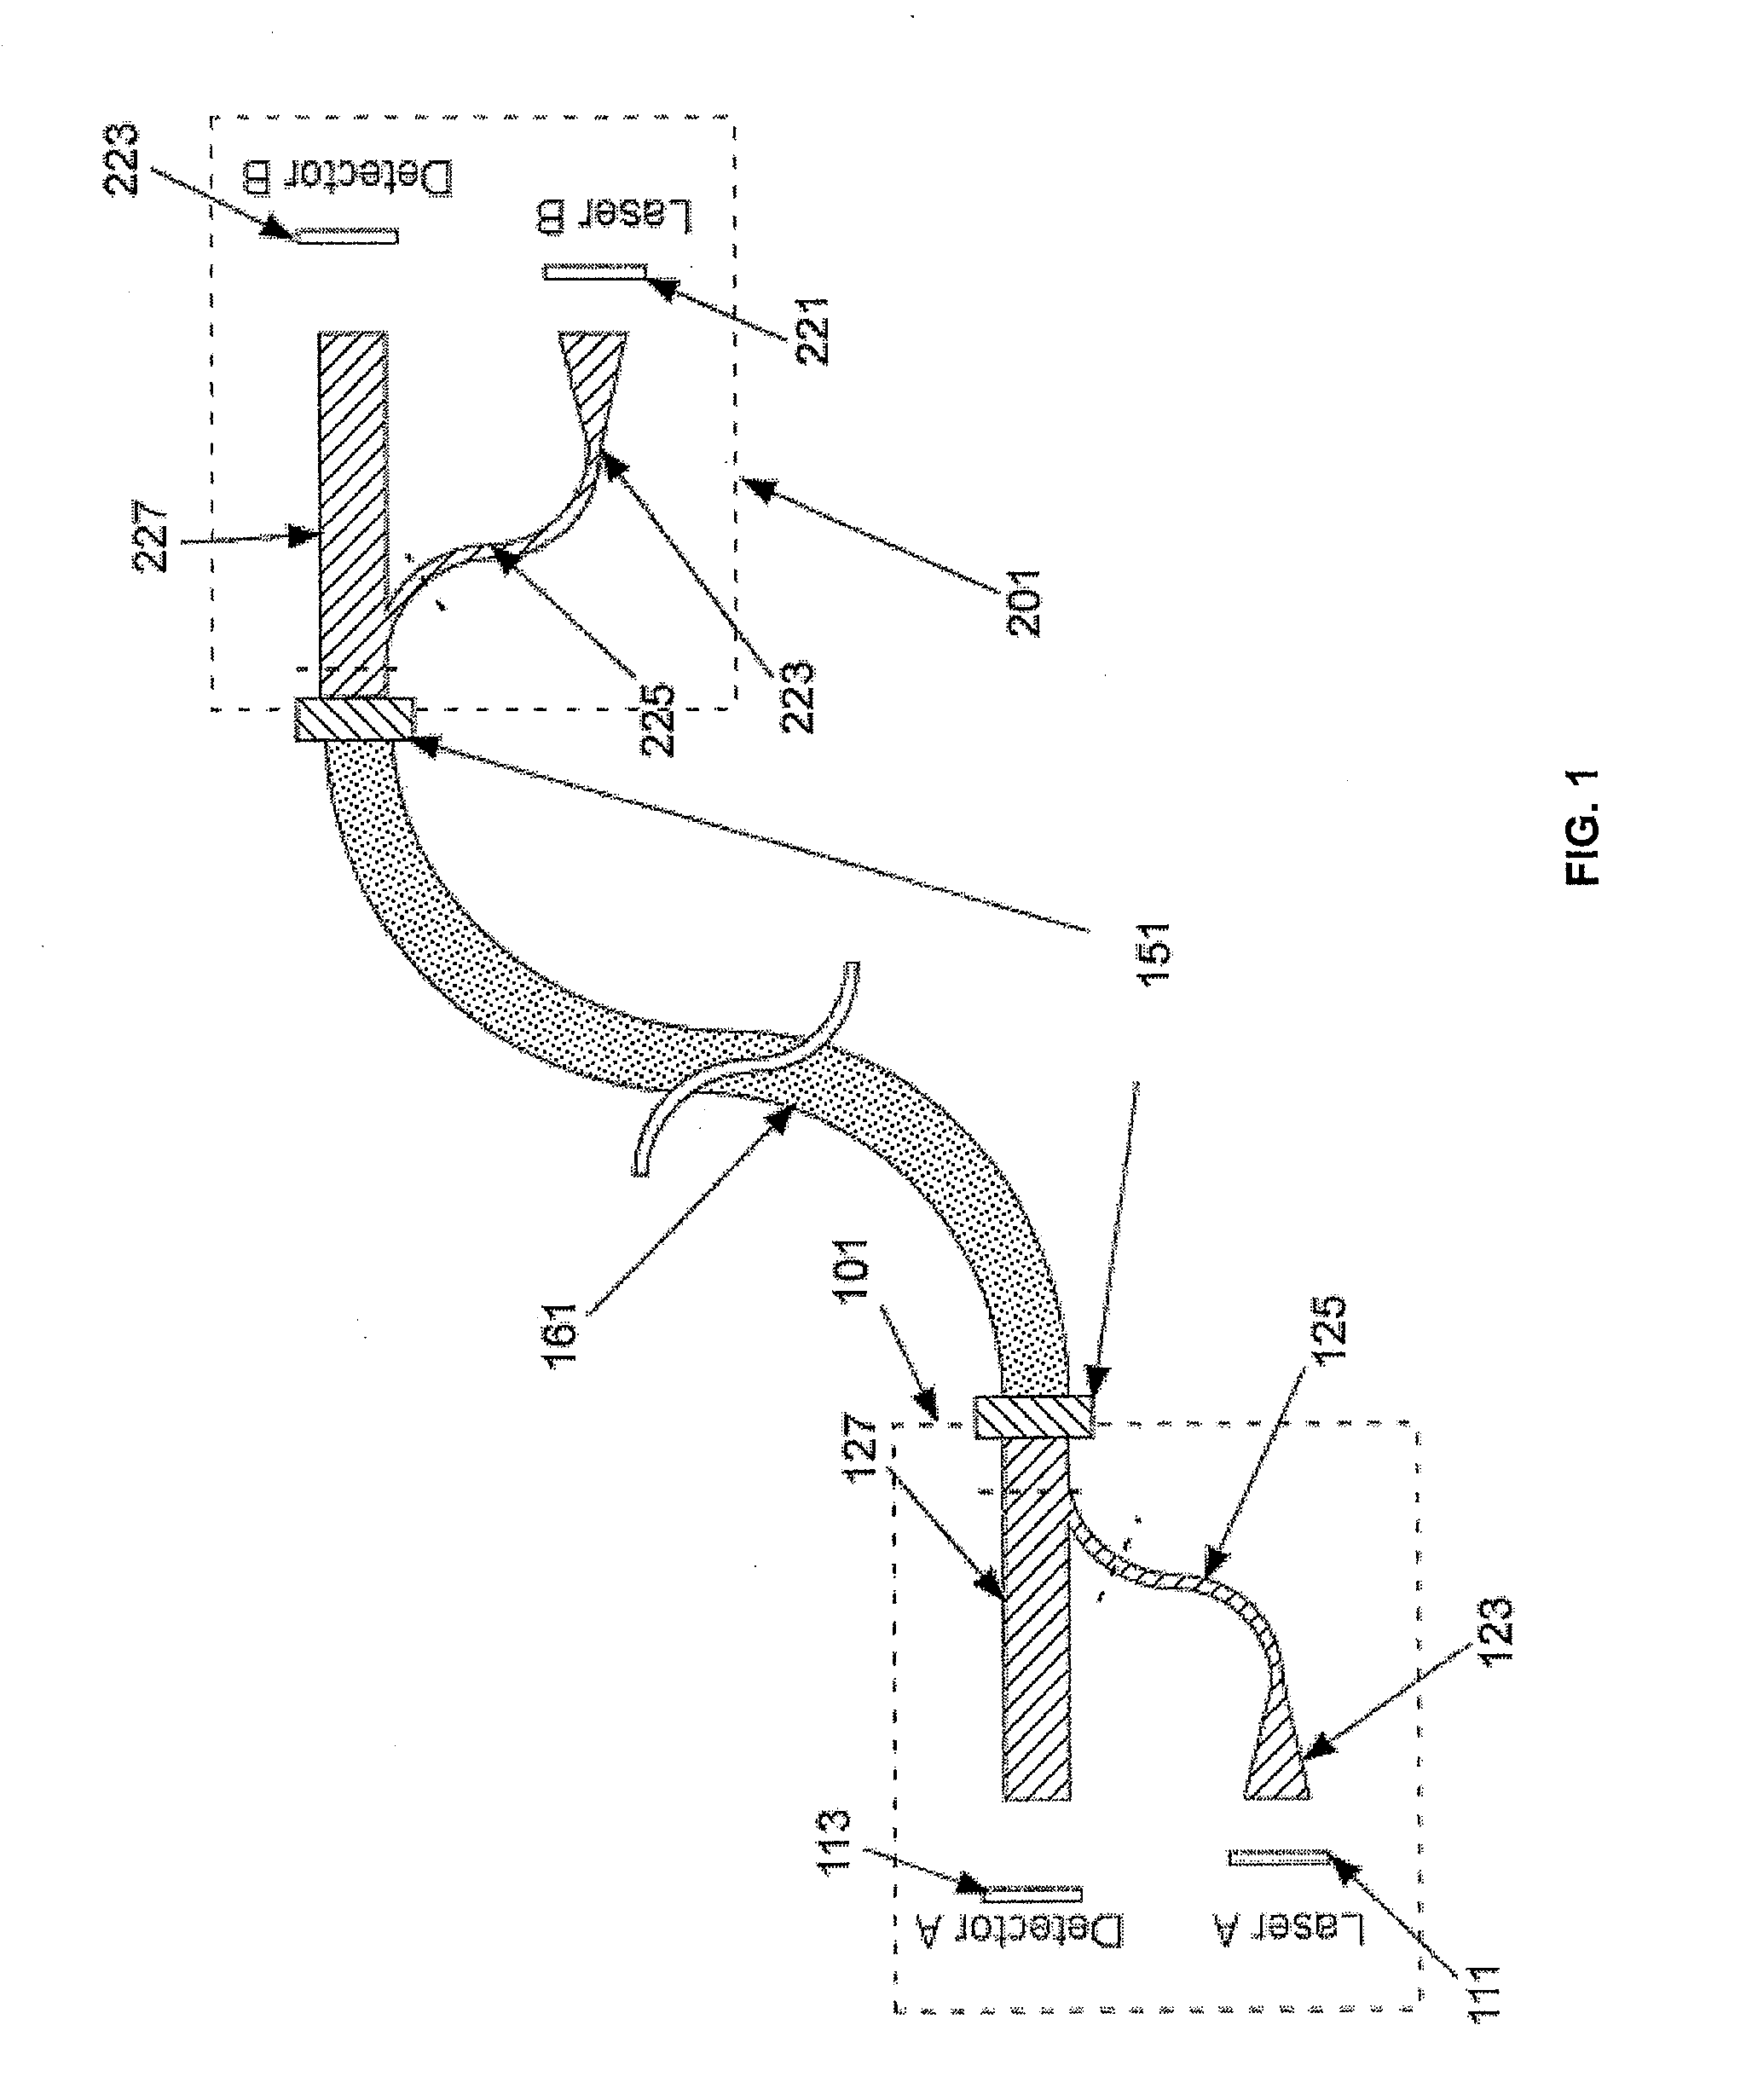 Bidirectional optical link over a single multimode fiber or waveguide